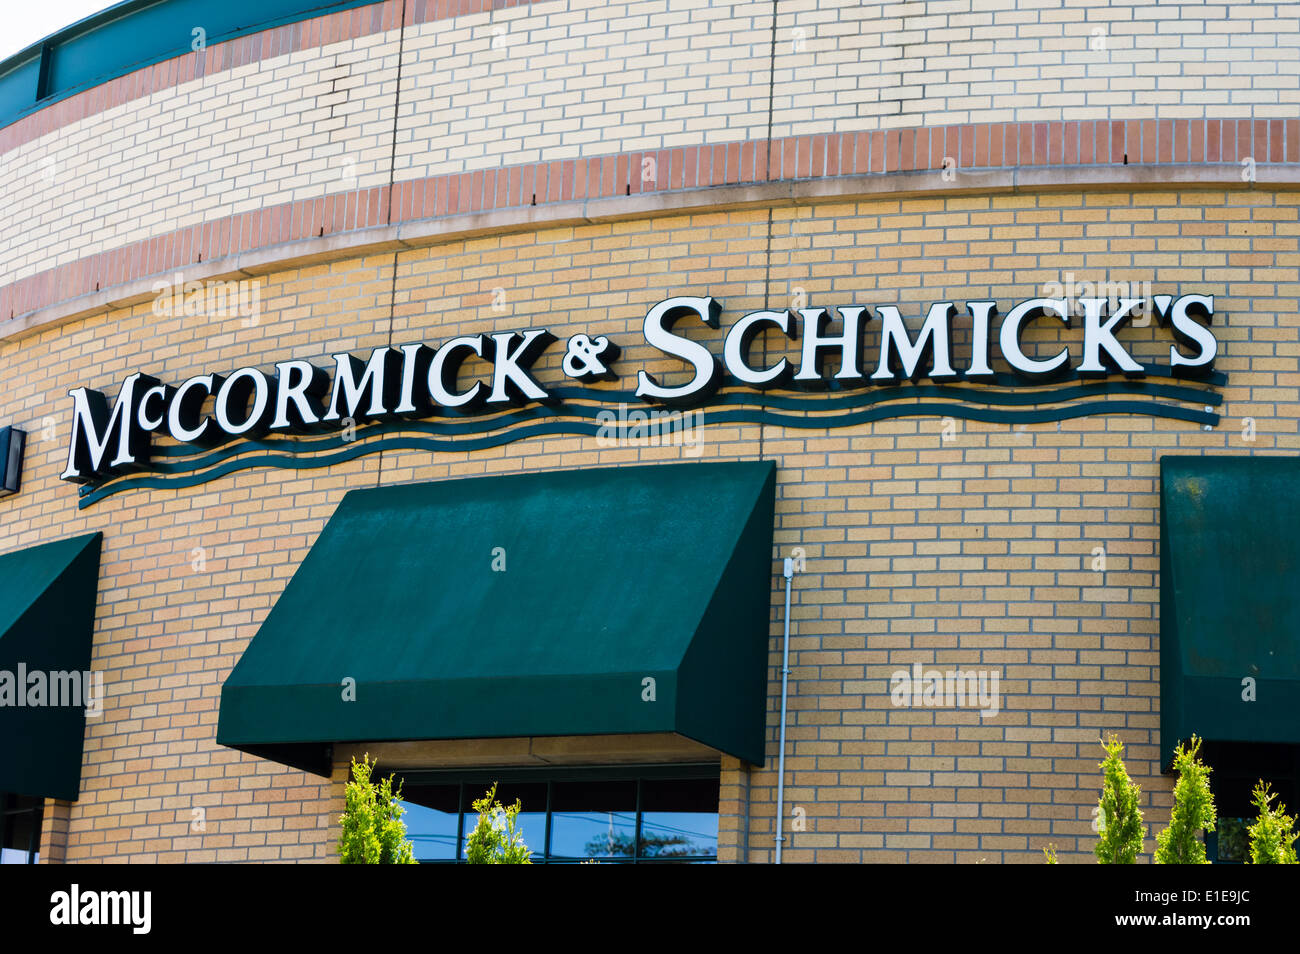 McCormick & Schmick's restaurant est une chaîne de restaurant avec un menu de fruits de mer concentrée. Banque D'Images